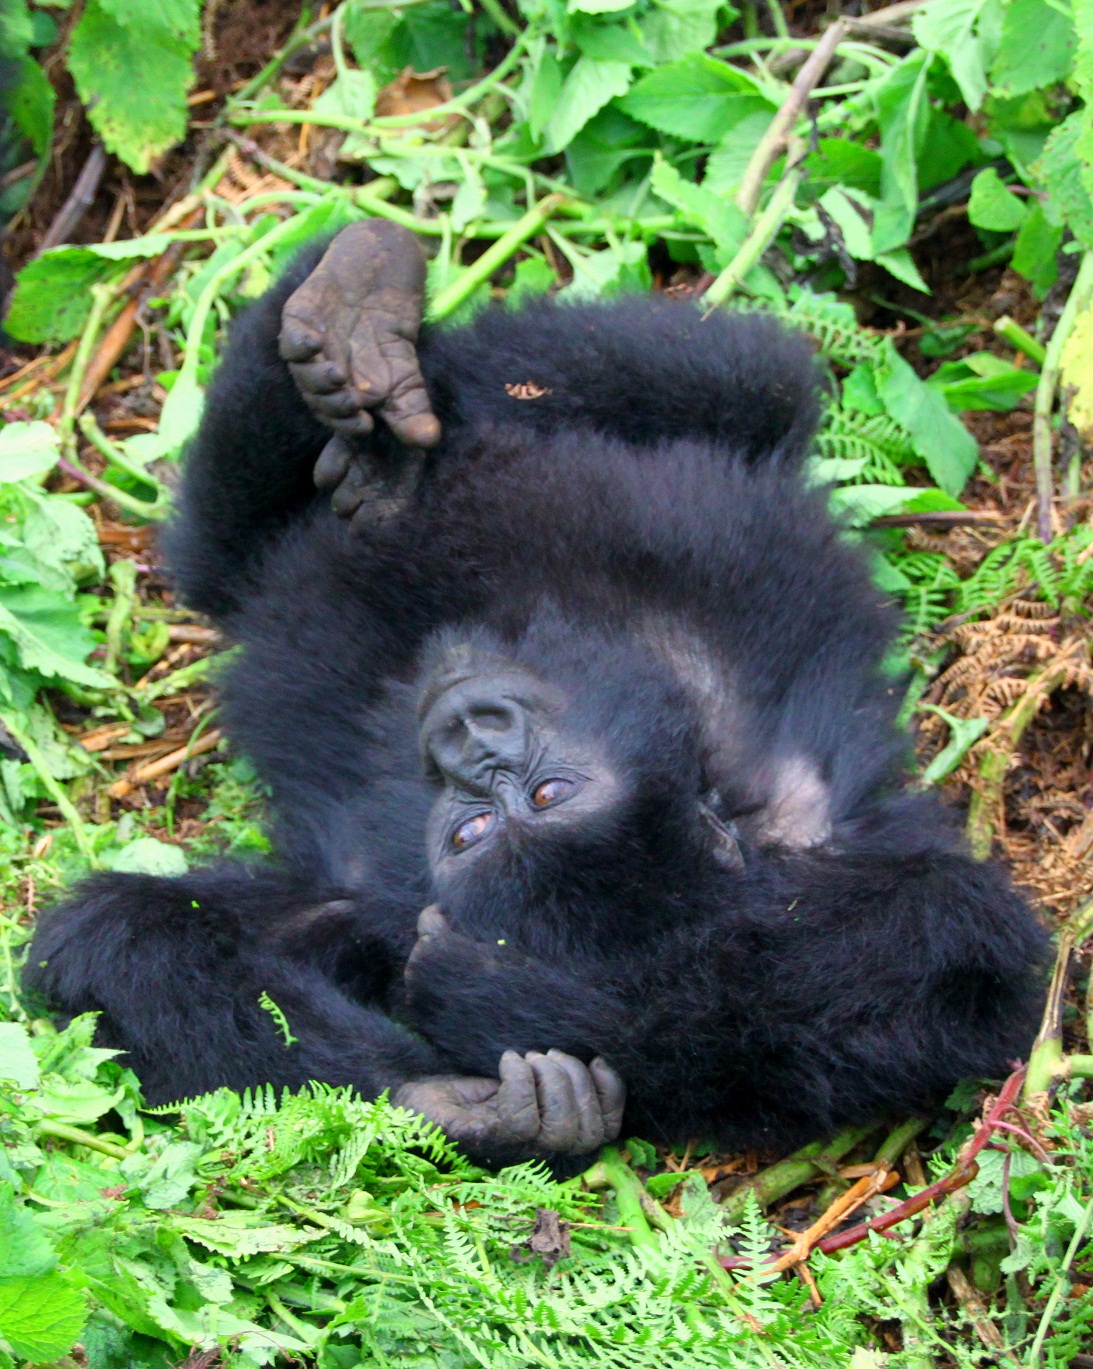 Young Gorilla playing in Rwanda